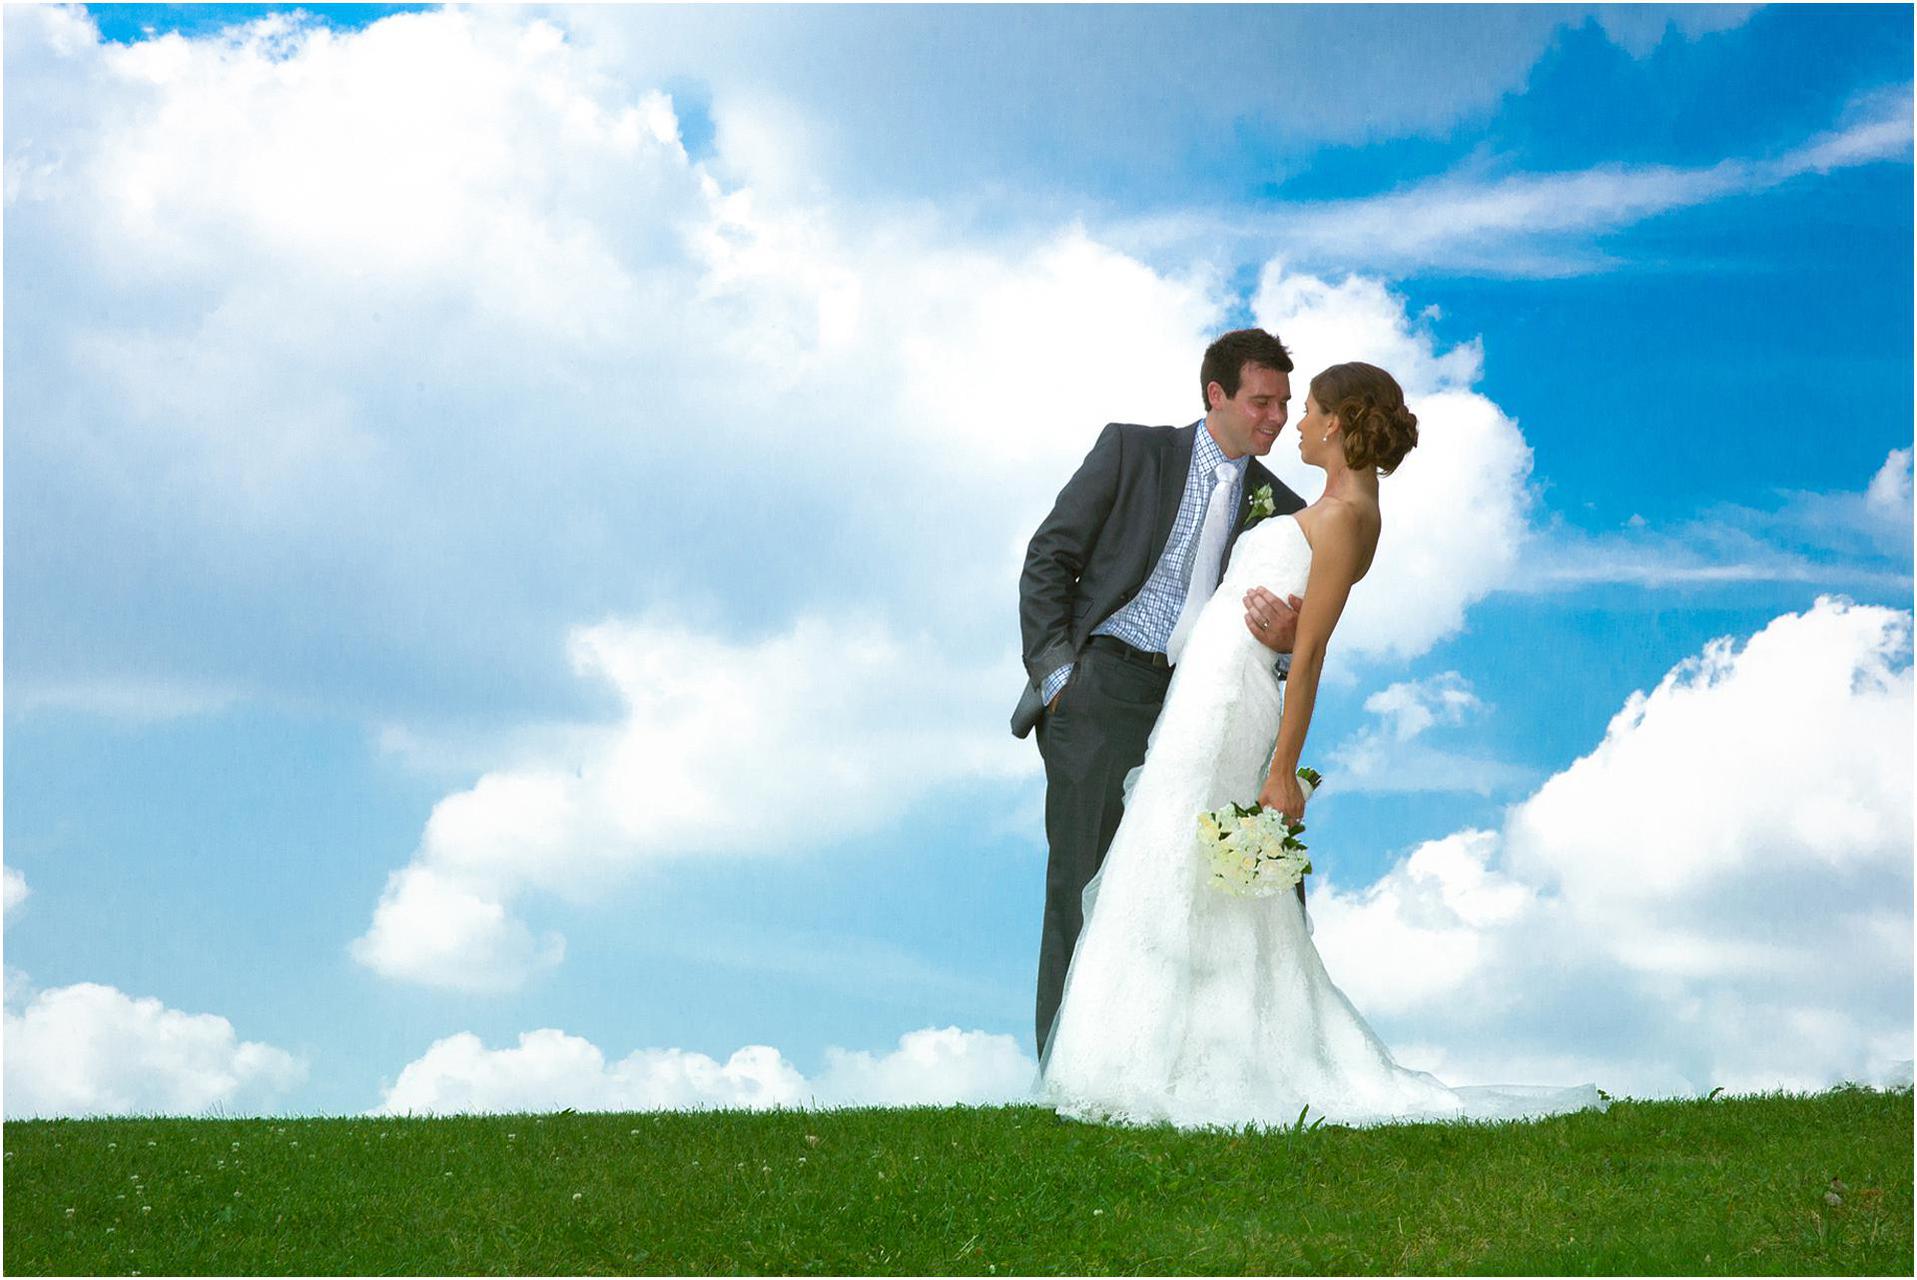 Illustrative Wedding Photography Cincinnati